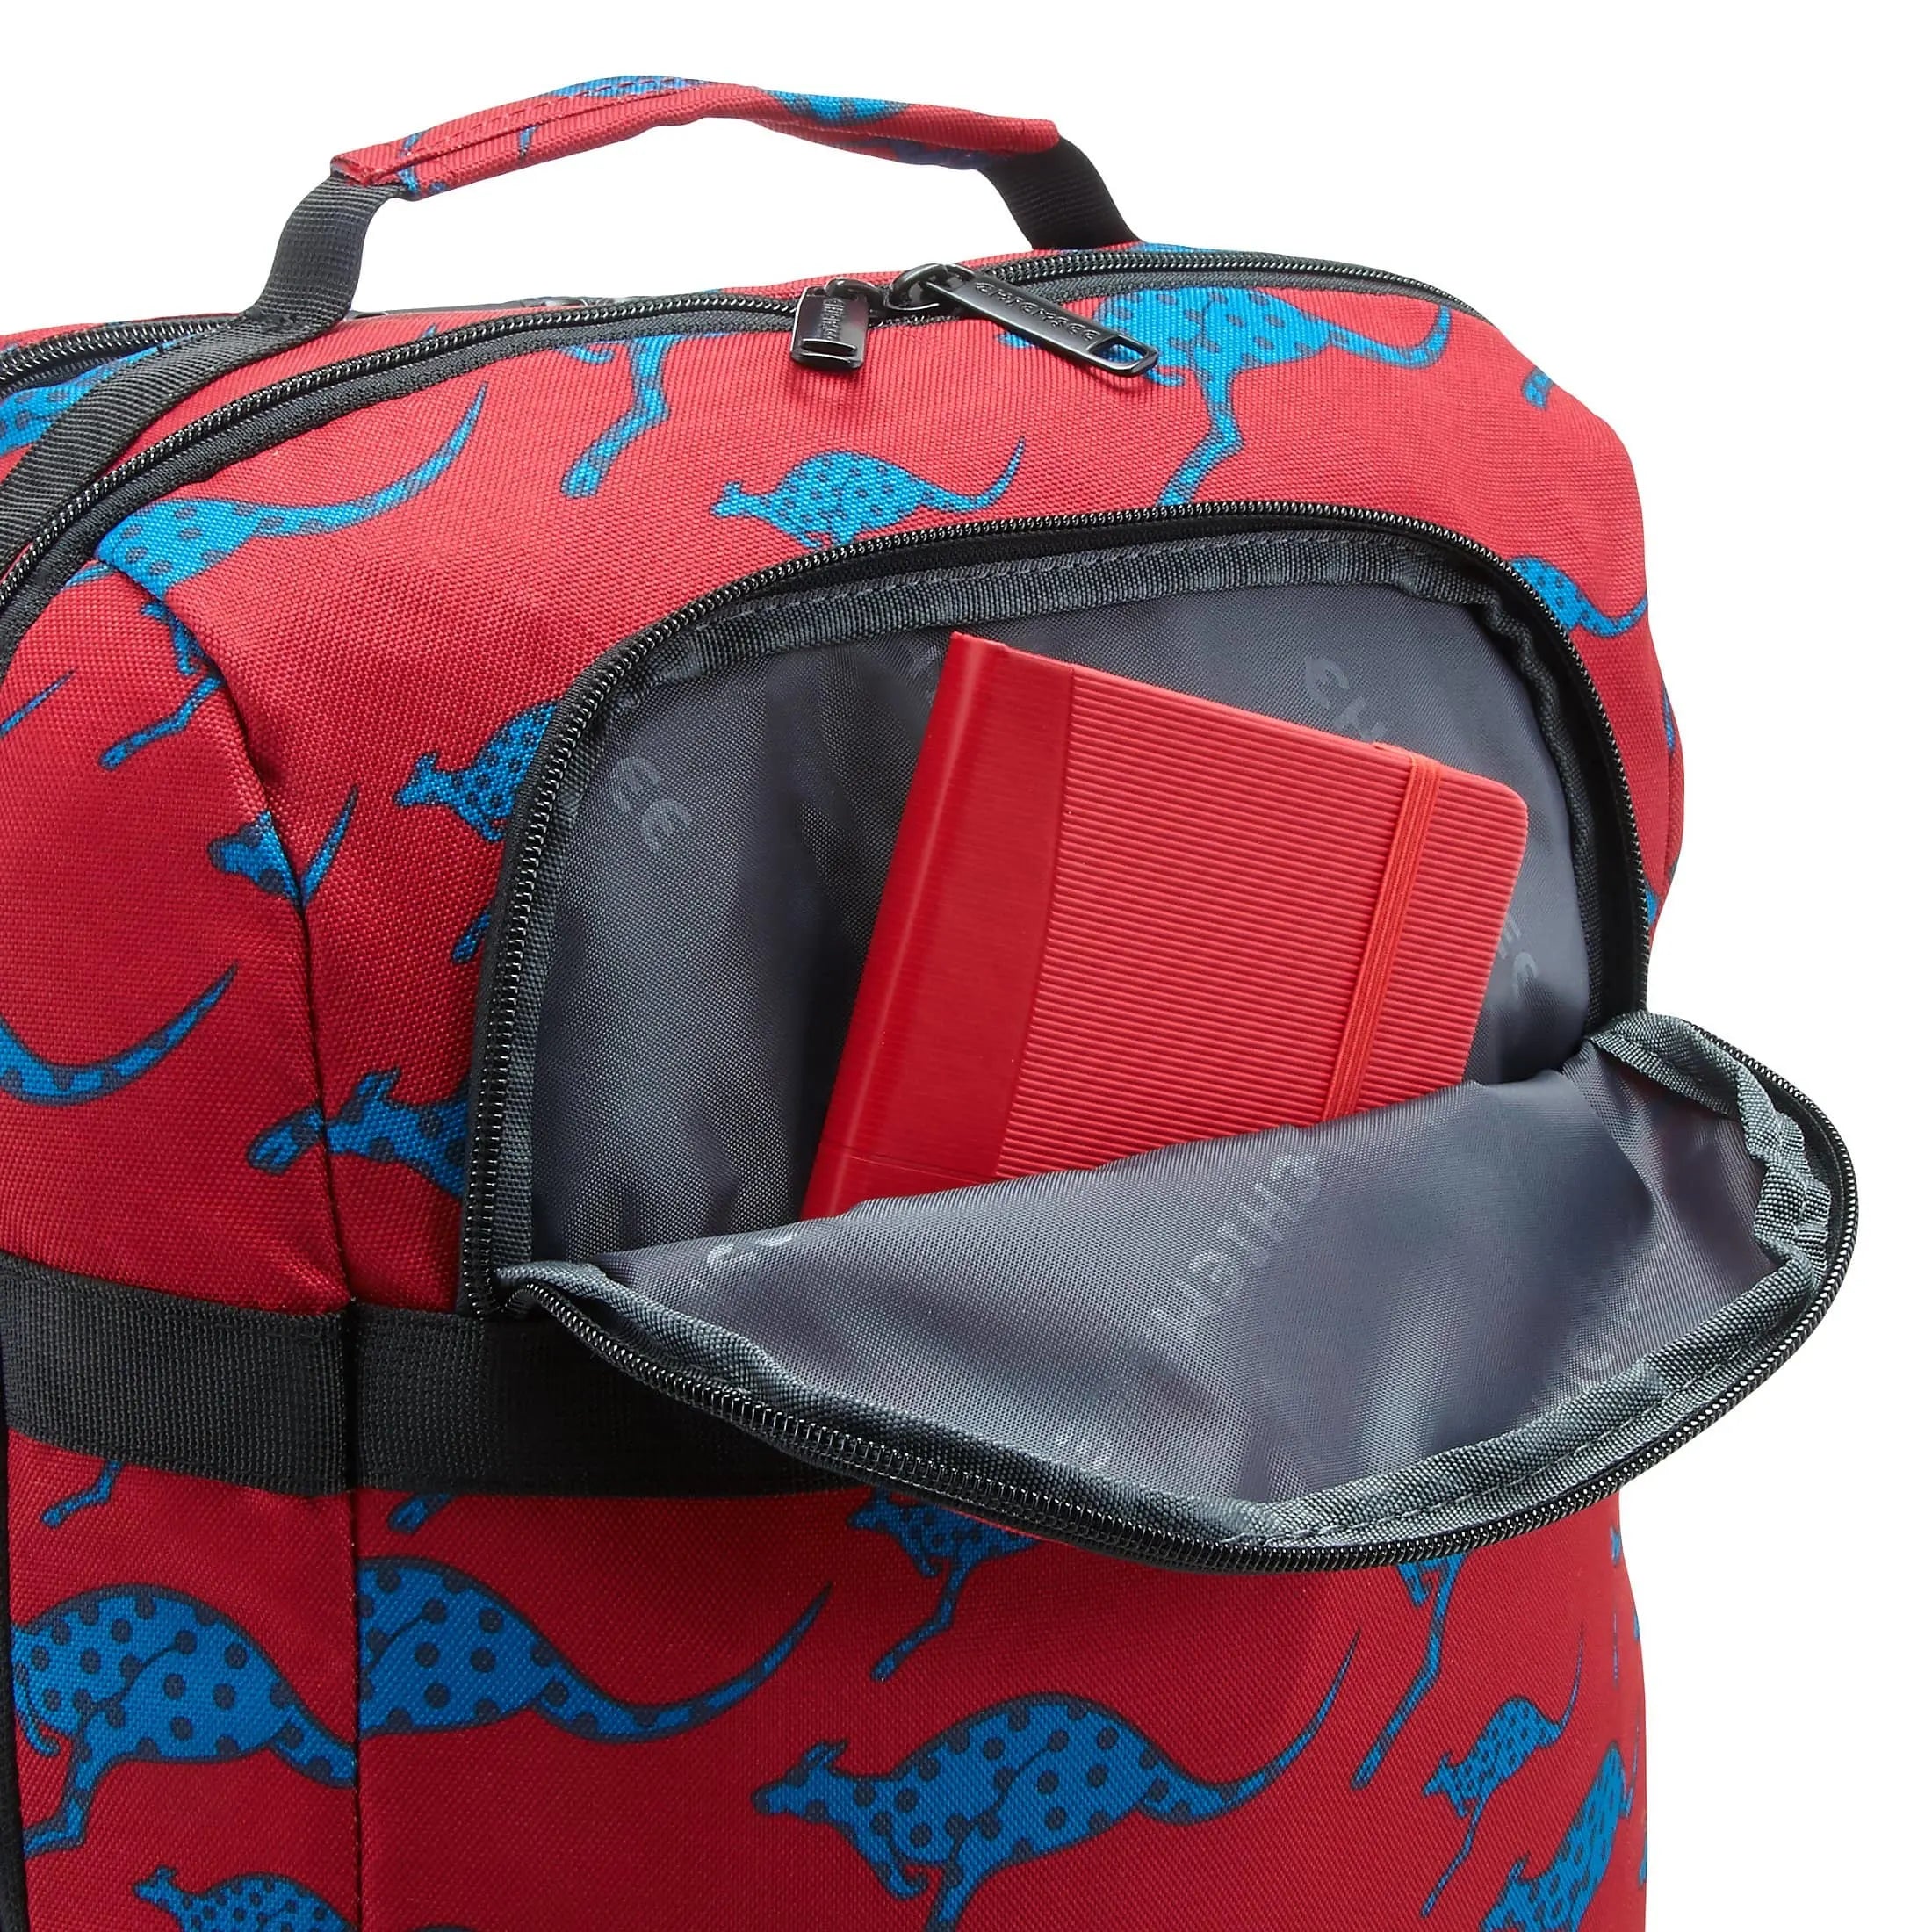 Chiemsee Sports & Travel Bags Travel Rucksack 41 cm - melange